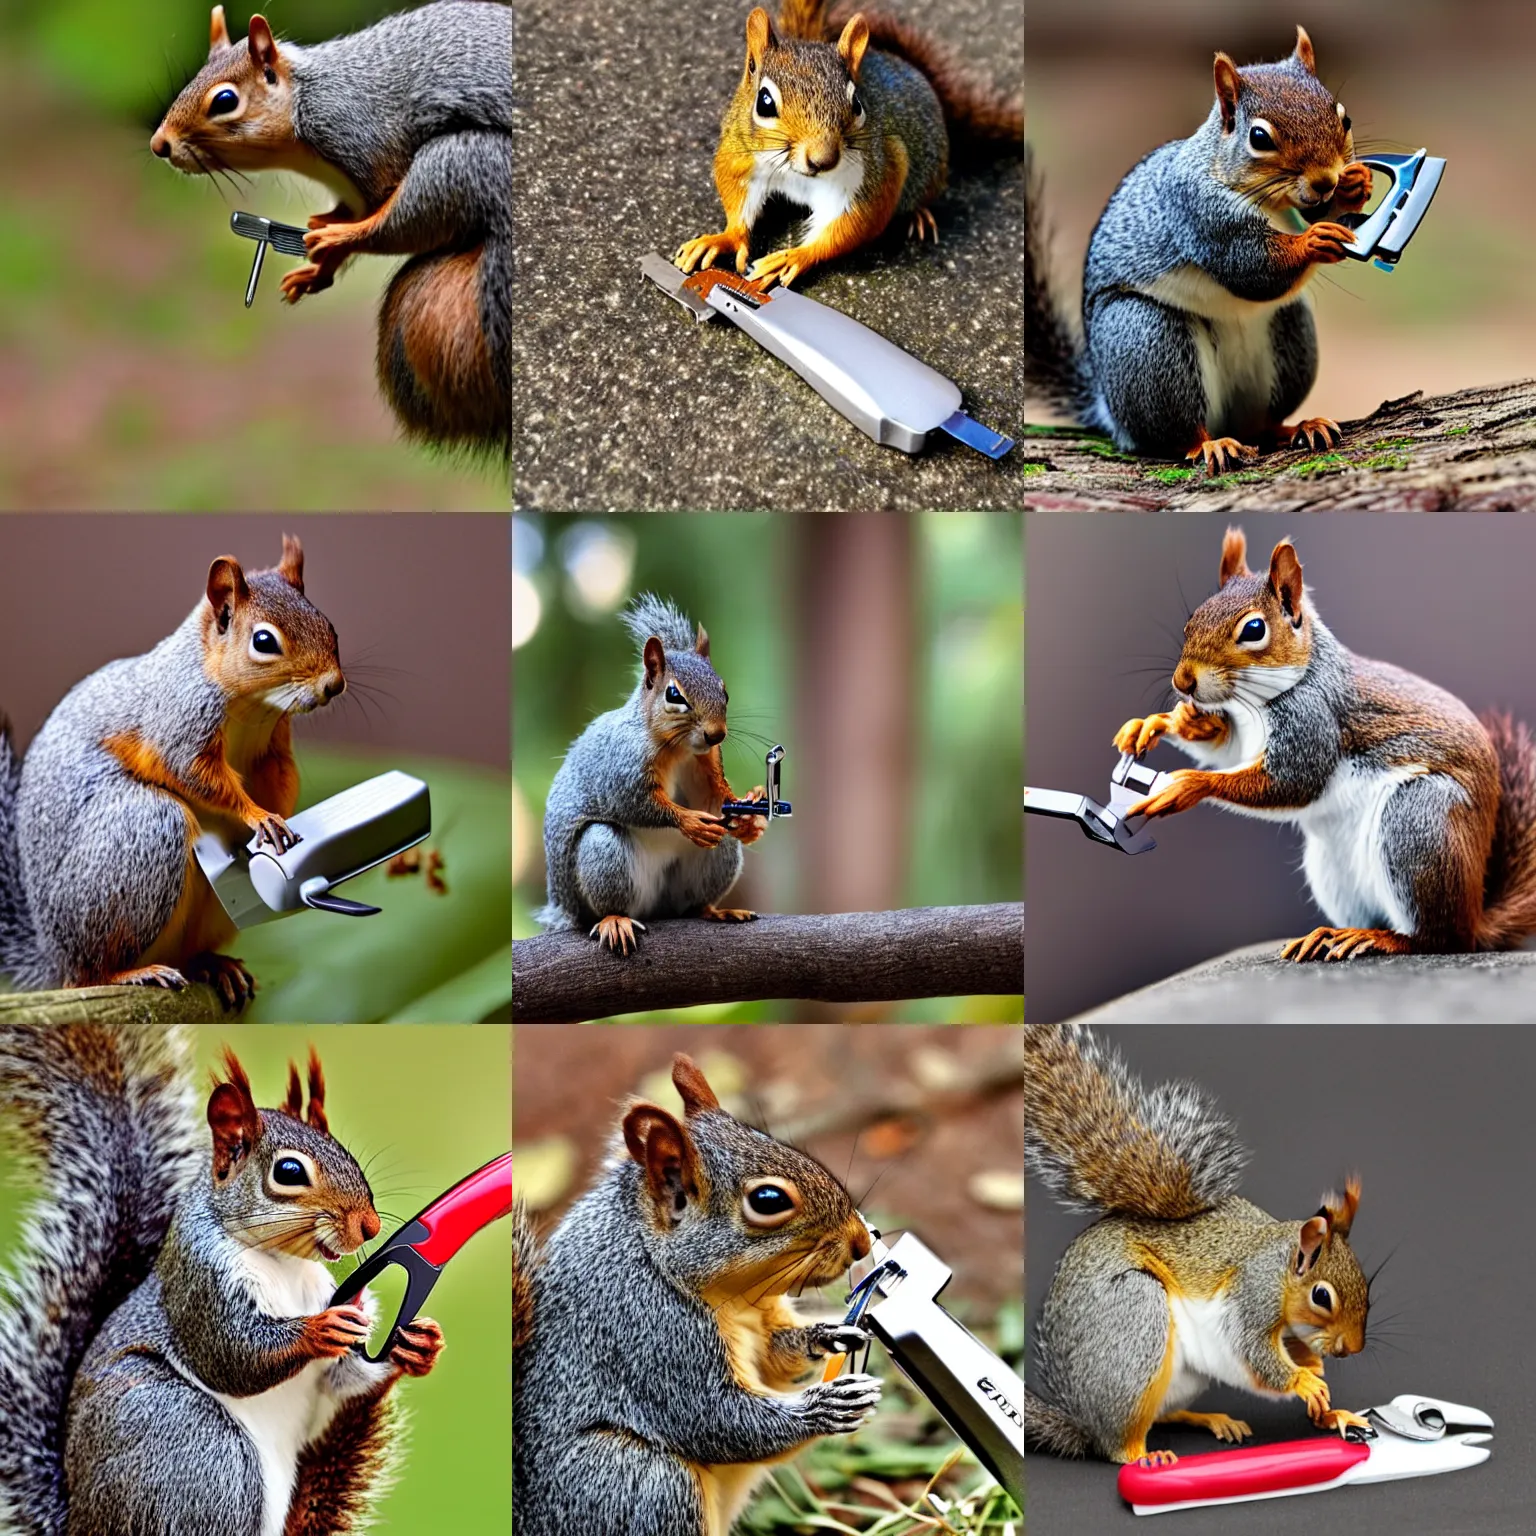 Prompt: squirrel using a nailclipper to clip its toenails